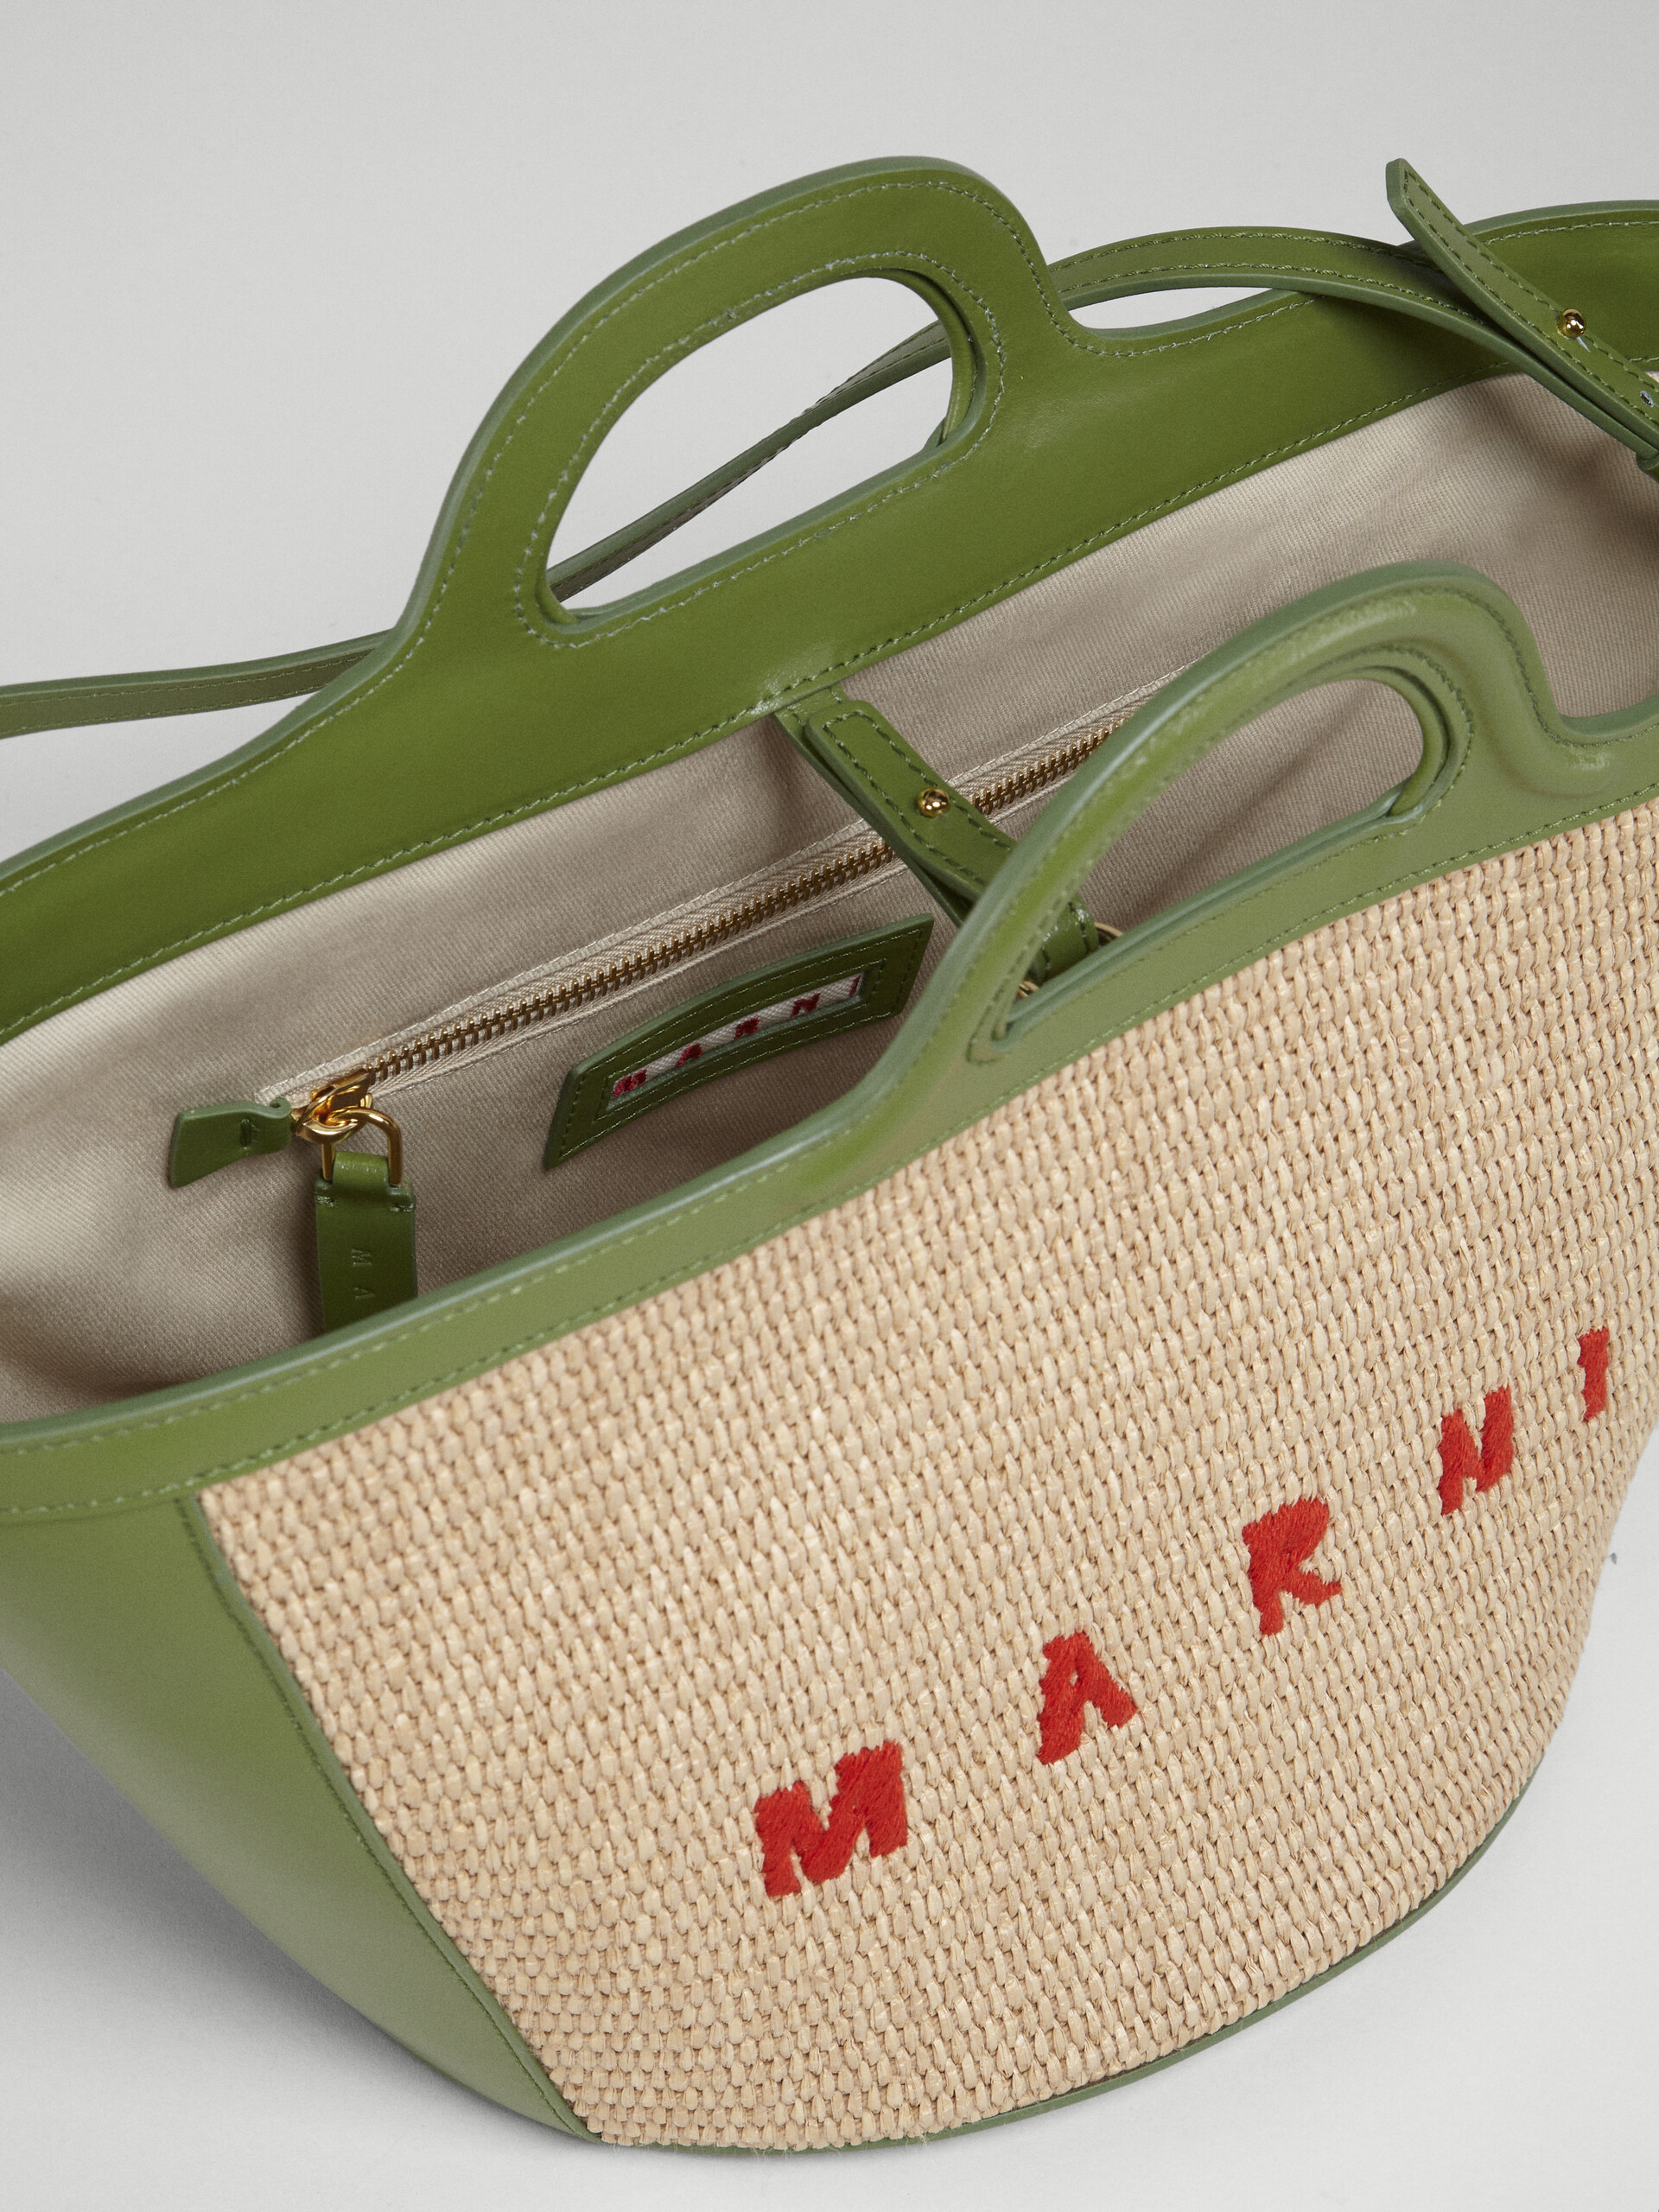 Green leather and raffia small TROPICALIA SUMMER bag - Handbag - Image 4